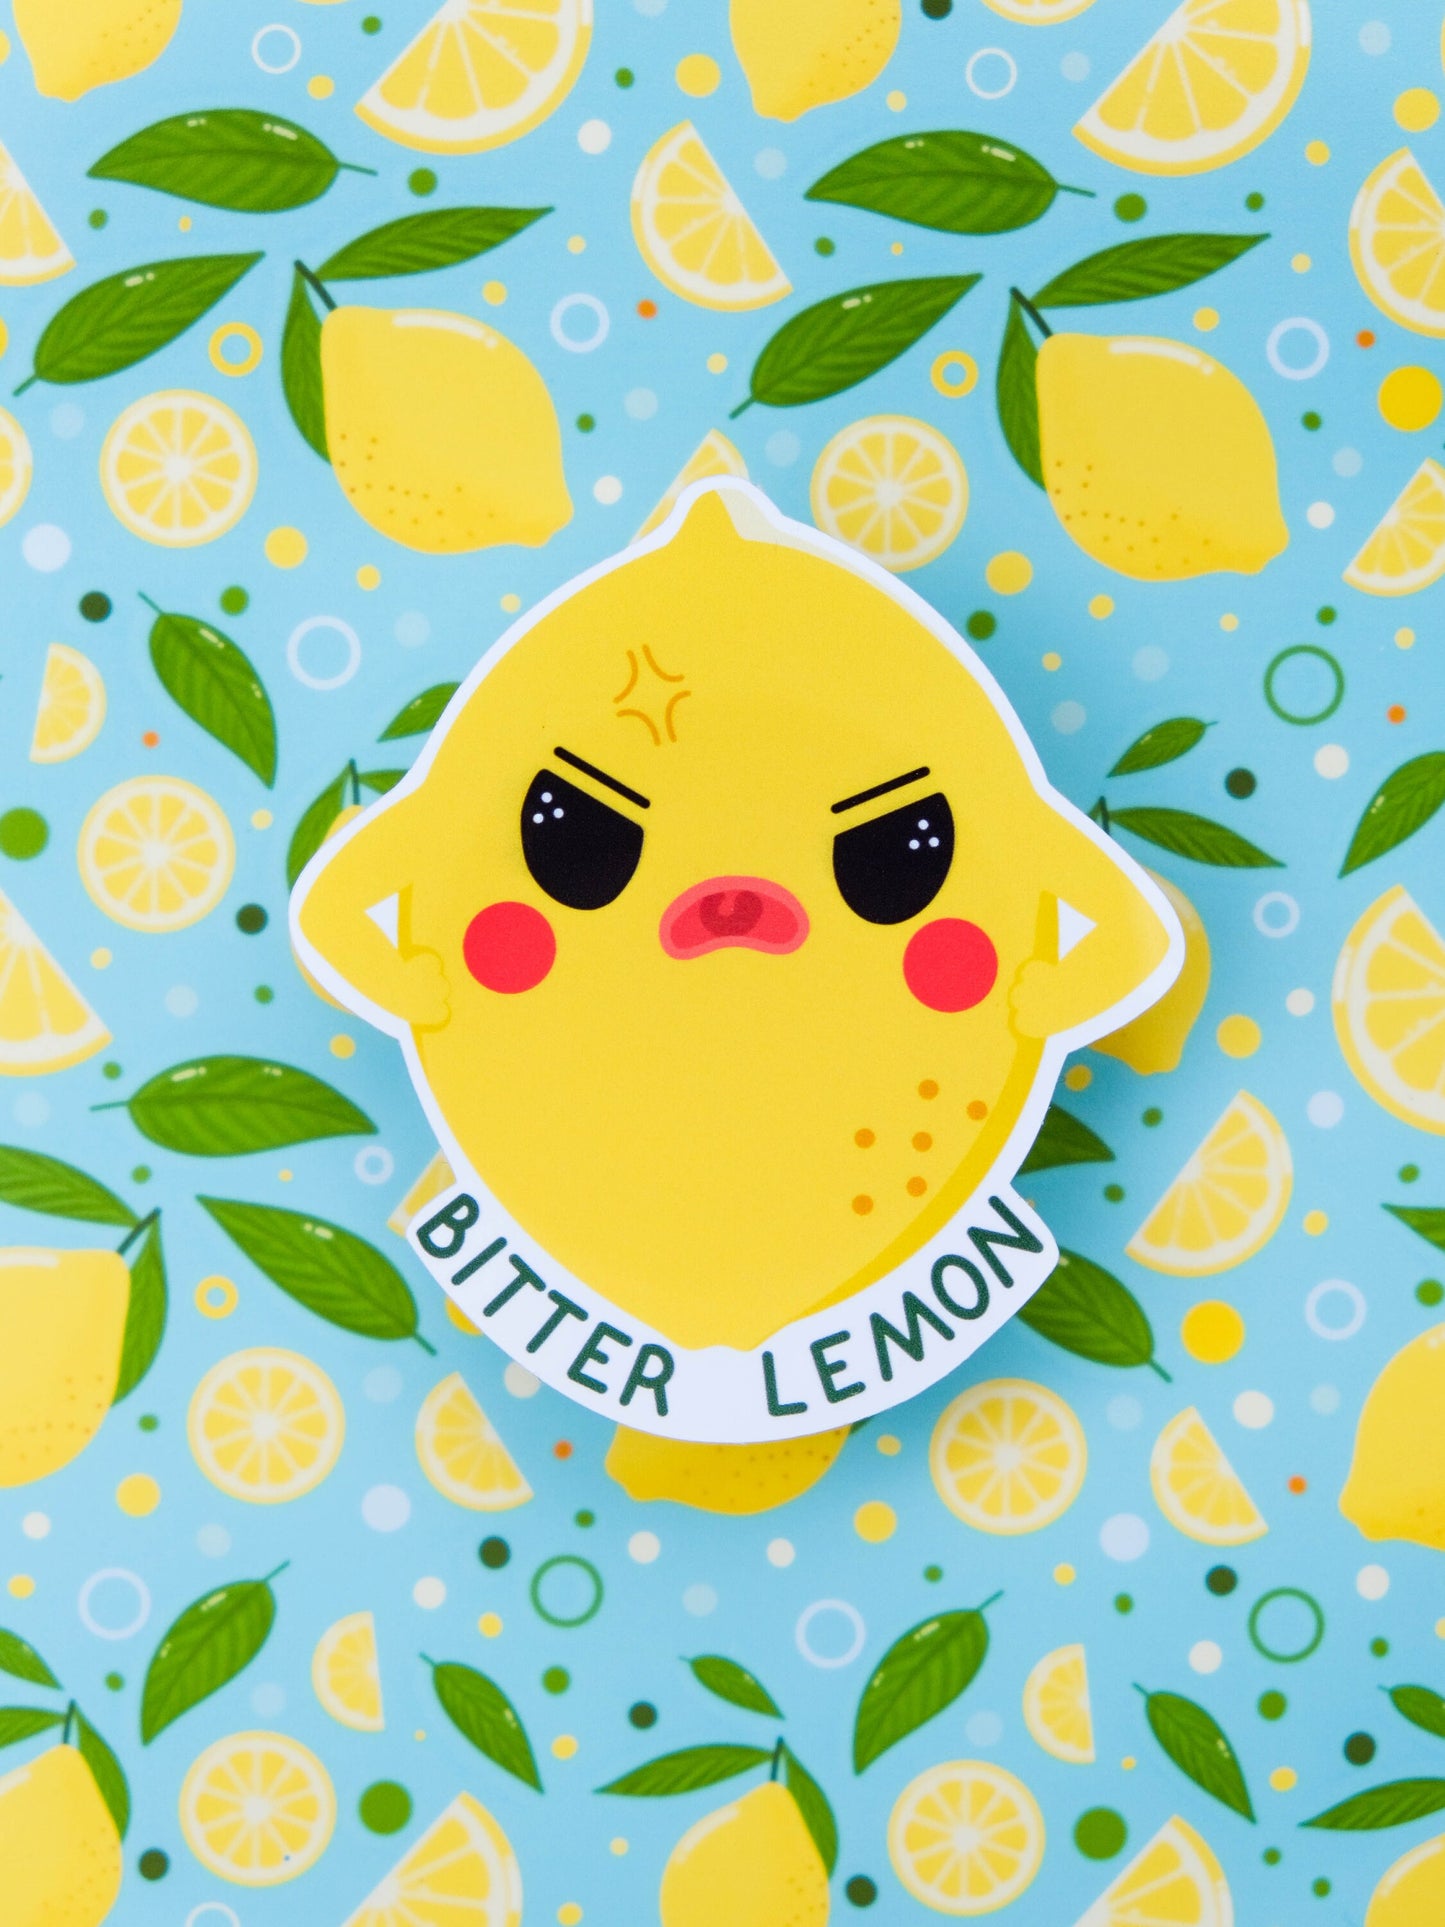 Sticker Cute Little Lemon - Lemonade Sticker - Water Resistant Sticker - Cute Lemon Sticker for Laptop - Bitter Lemon Sticker